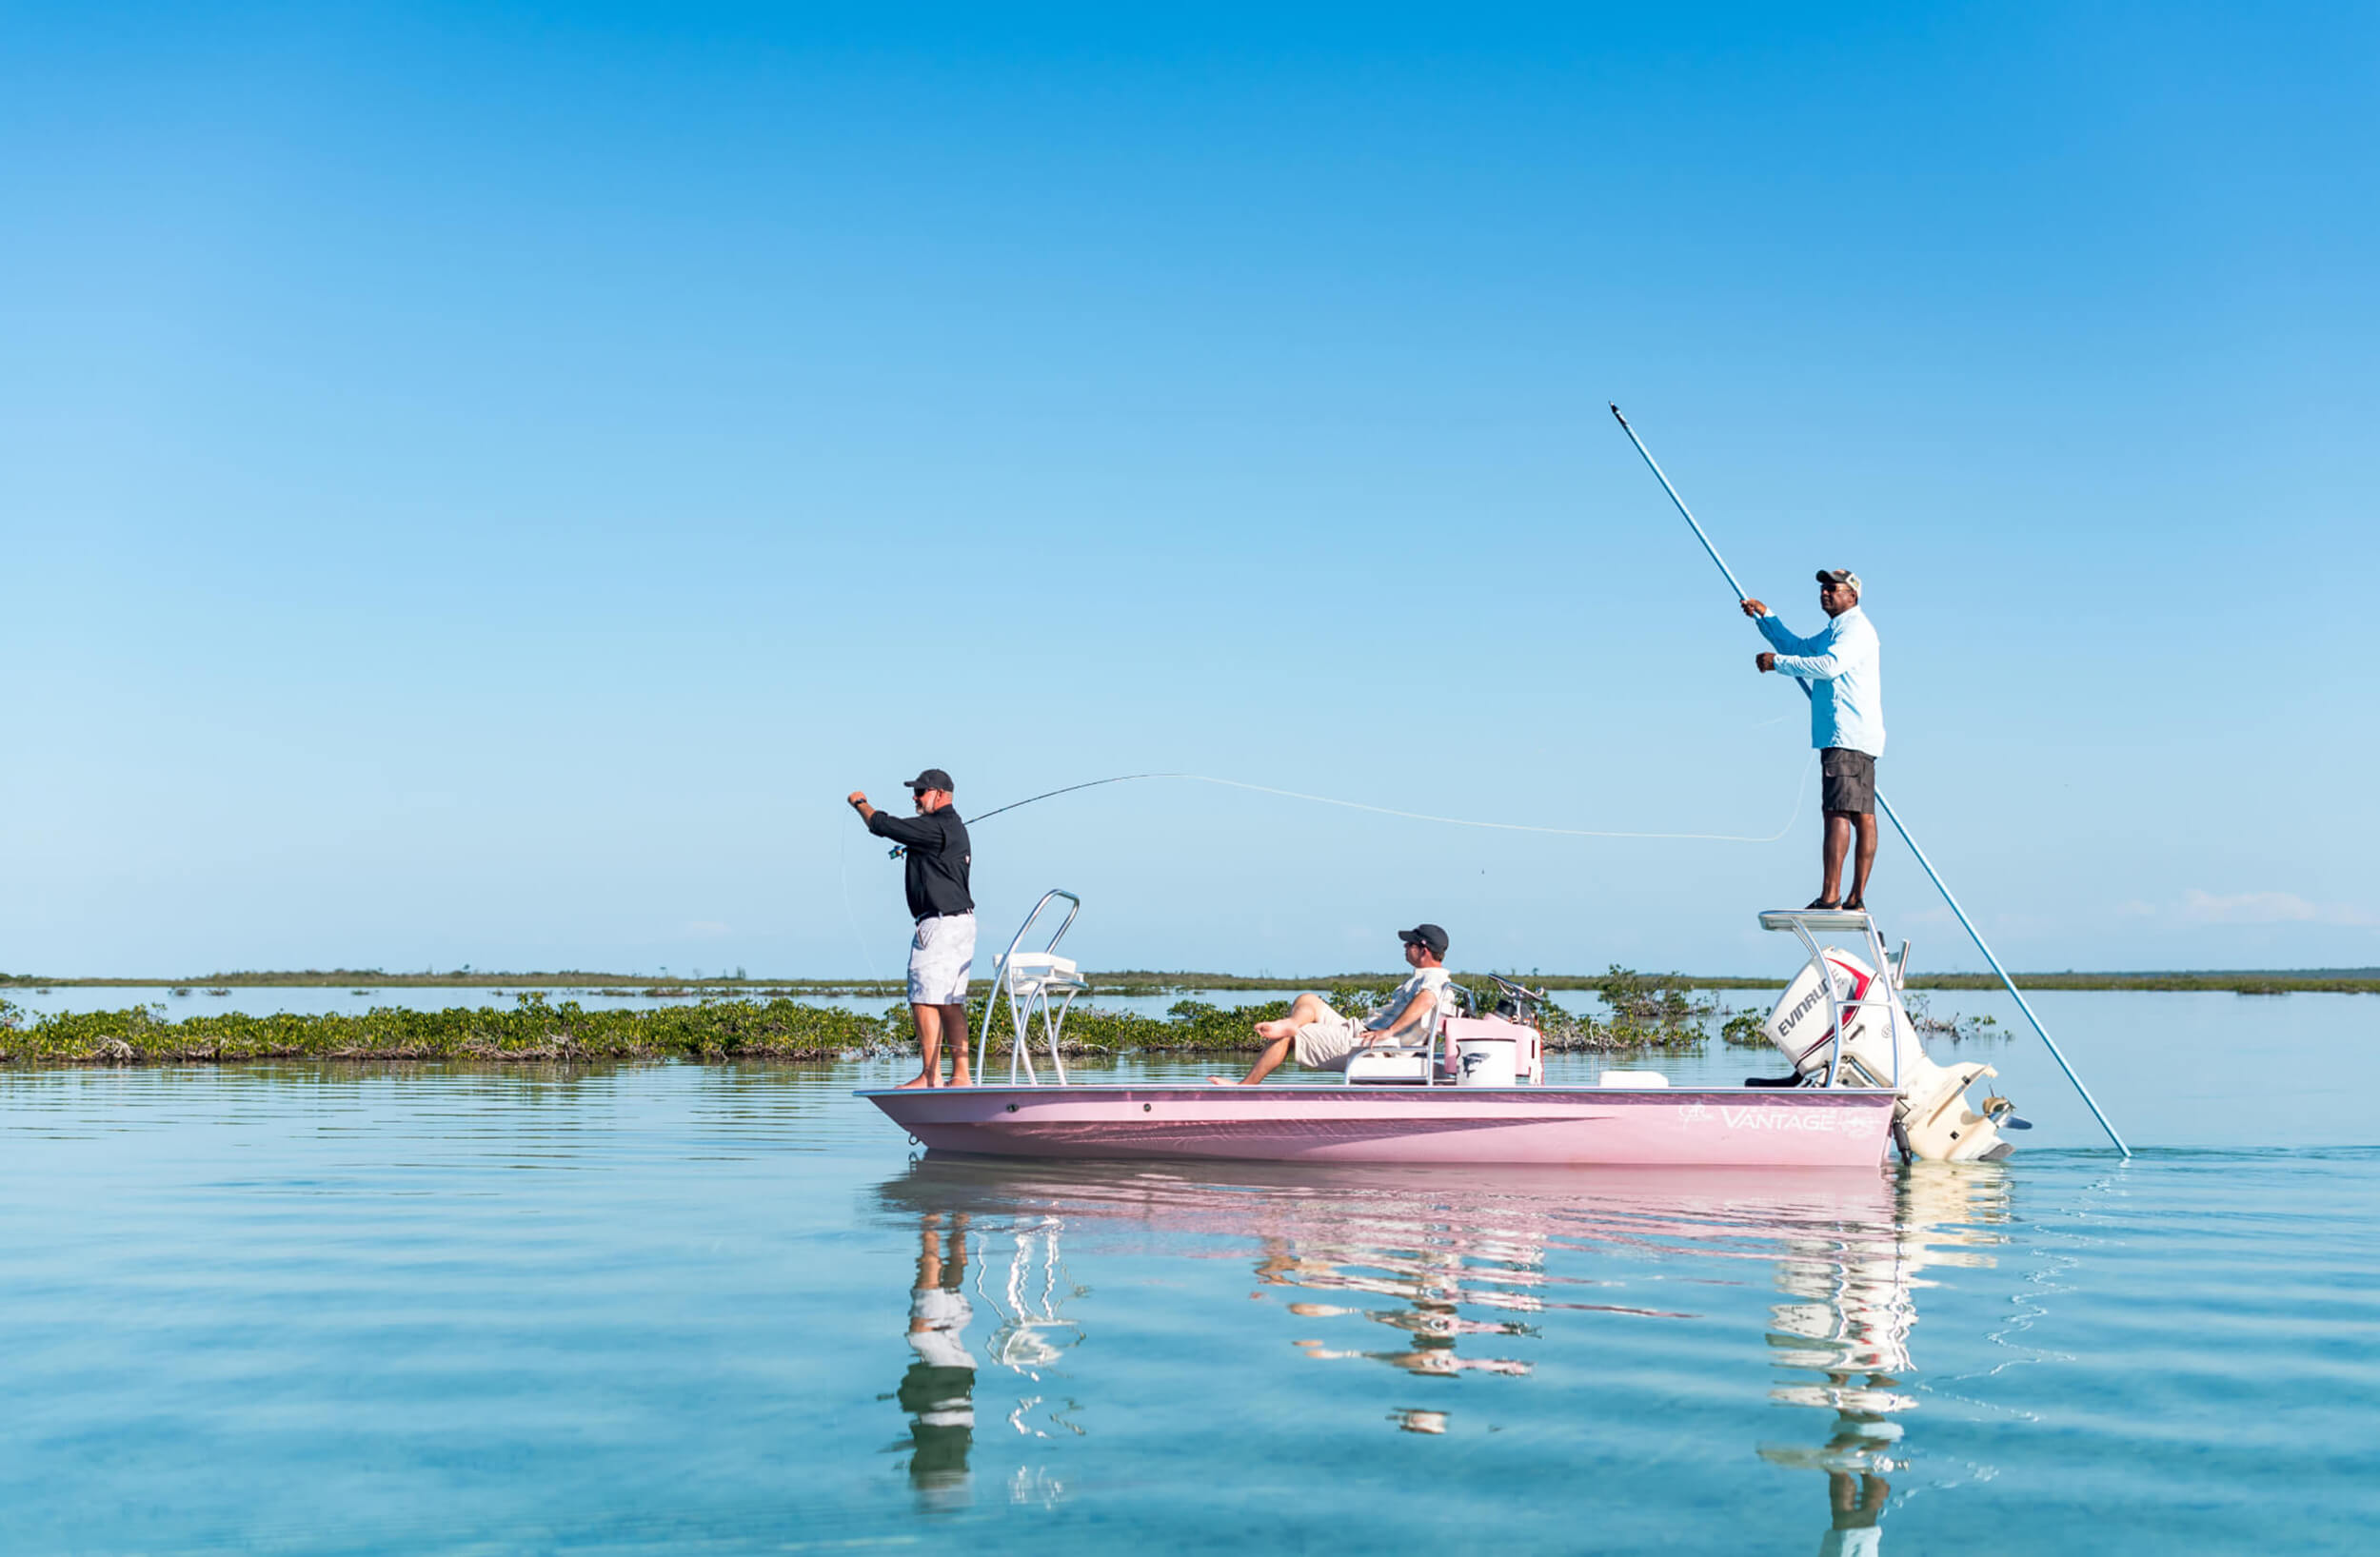 Abaco Club members fishing near Winding Bay